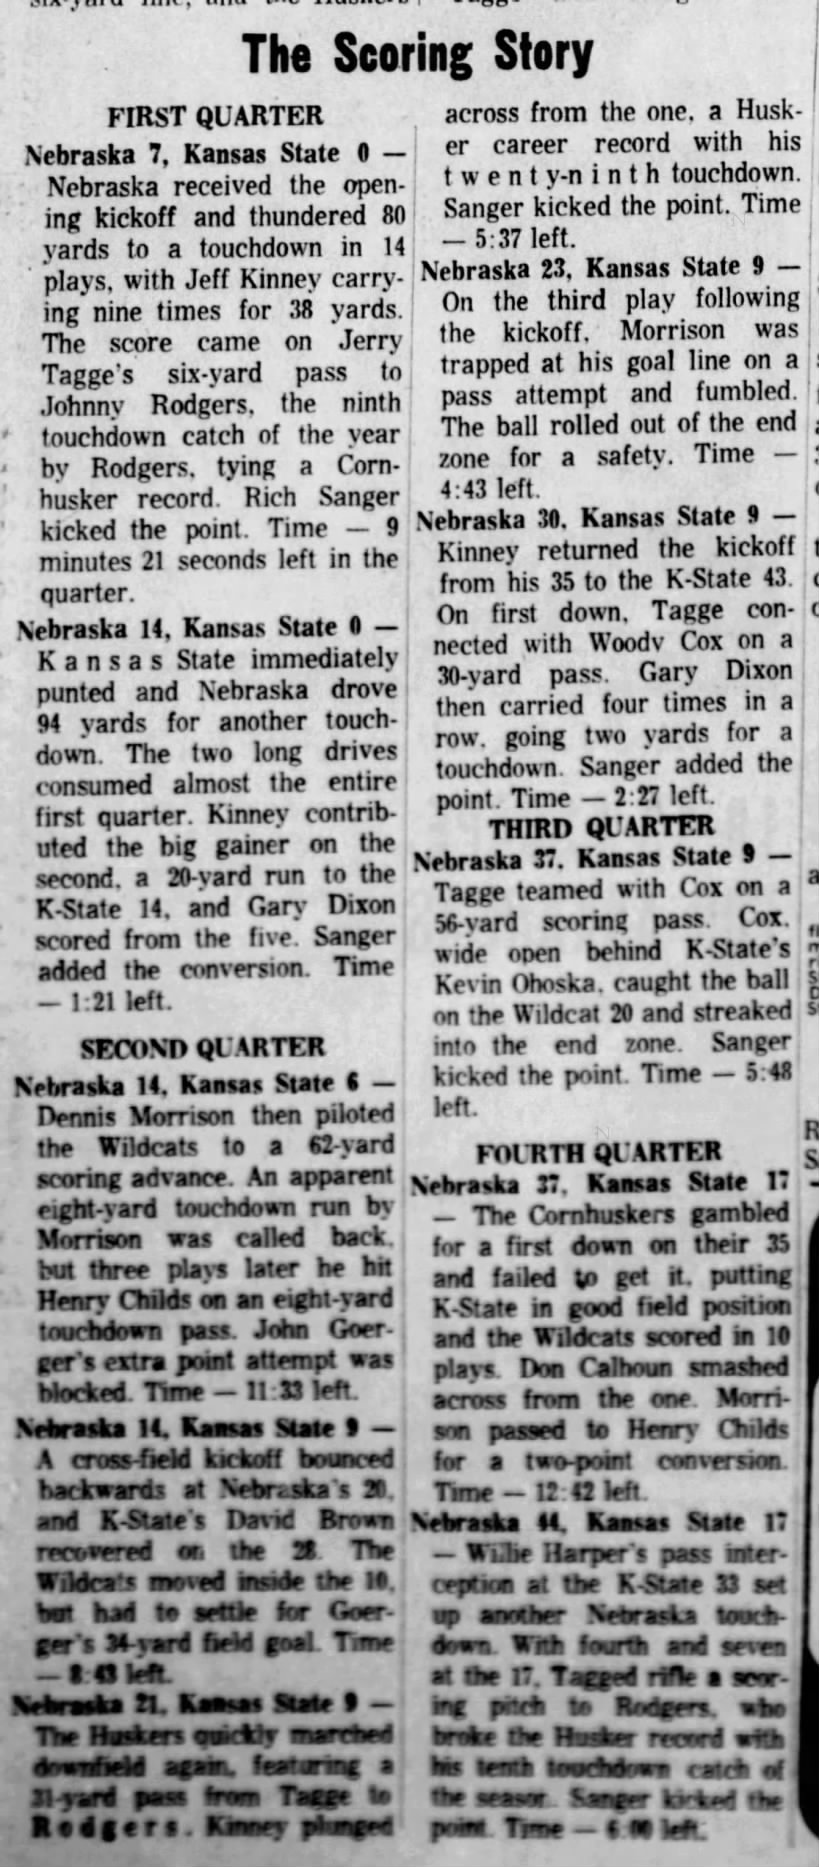 1971 Nebraska-Kansas State scoring summary